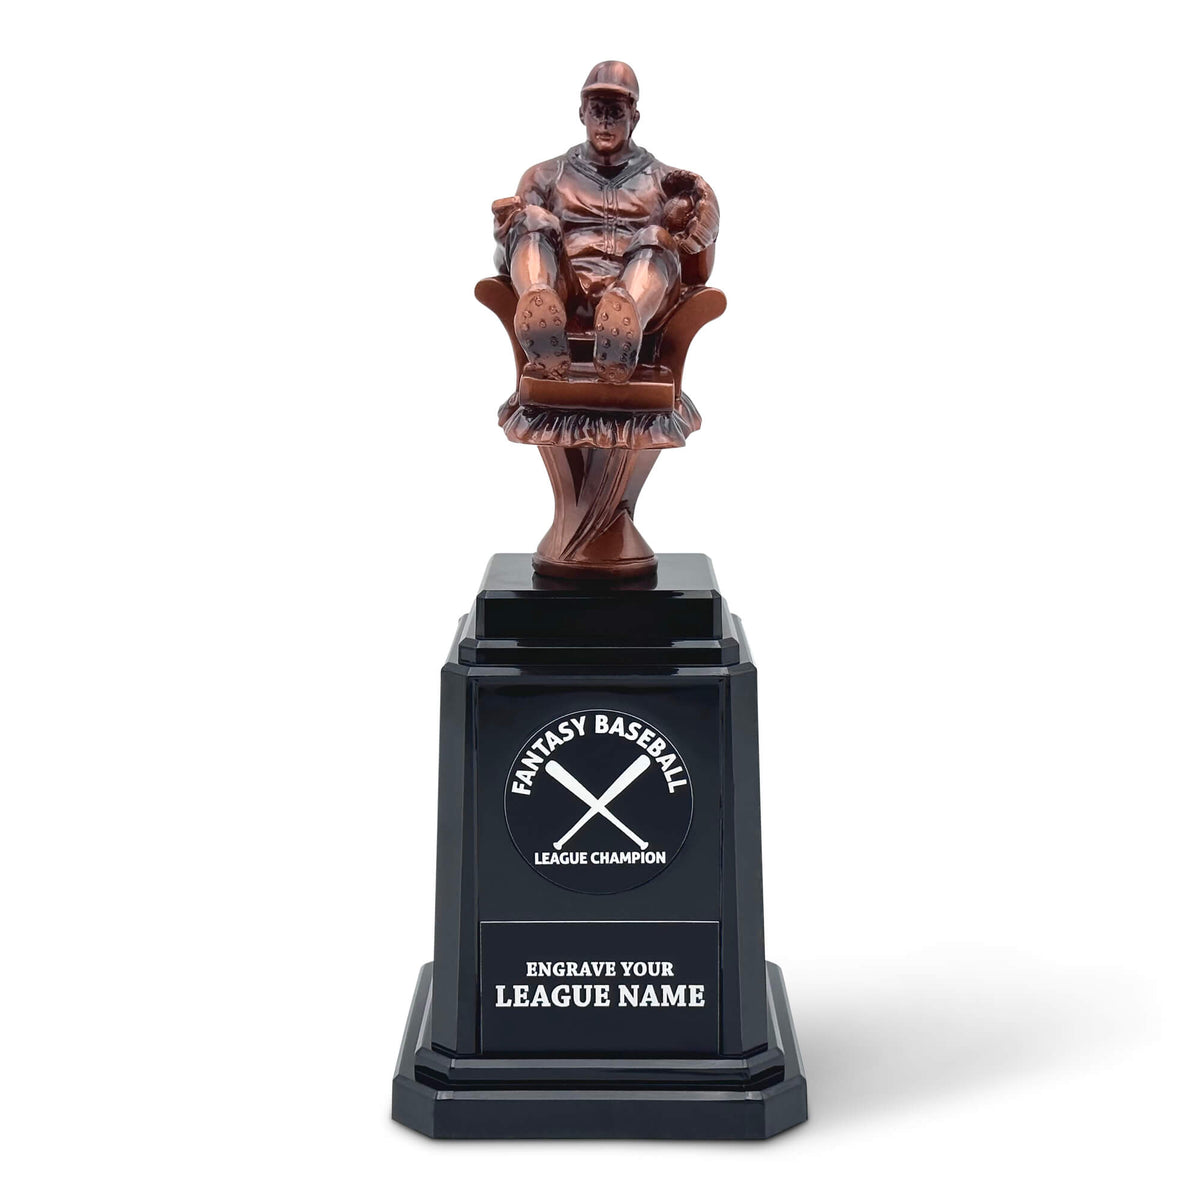 Fantasy Baseball Mega Ring Trophy